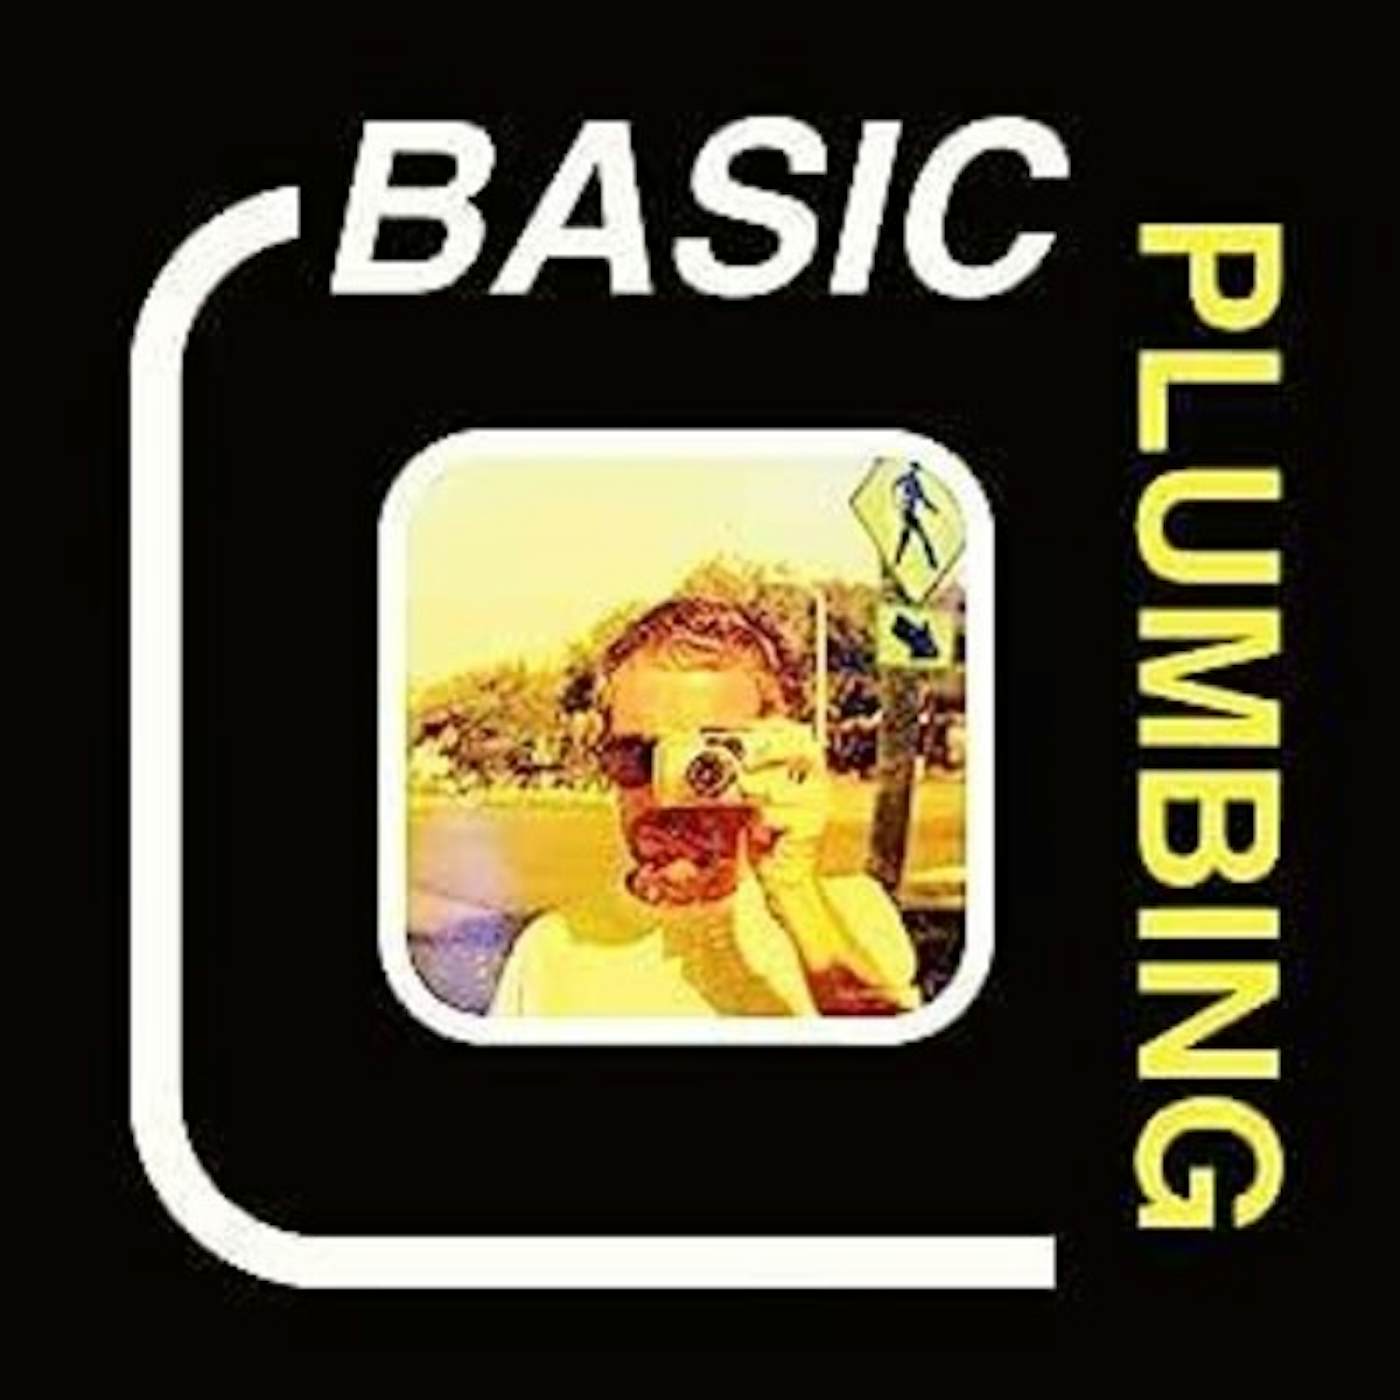 Basic Plumbing KEEPING UP APPEARANCES CD